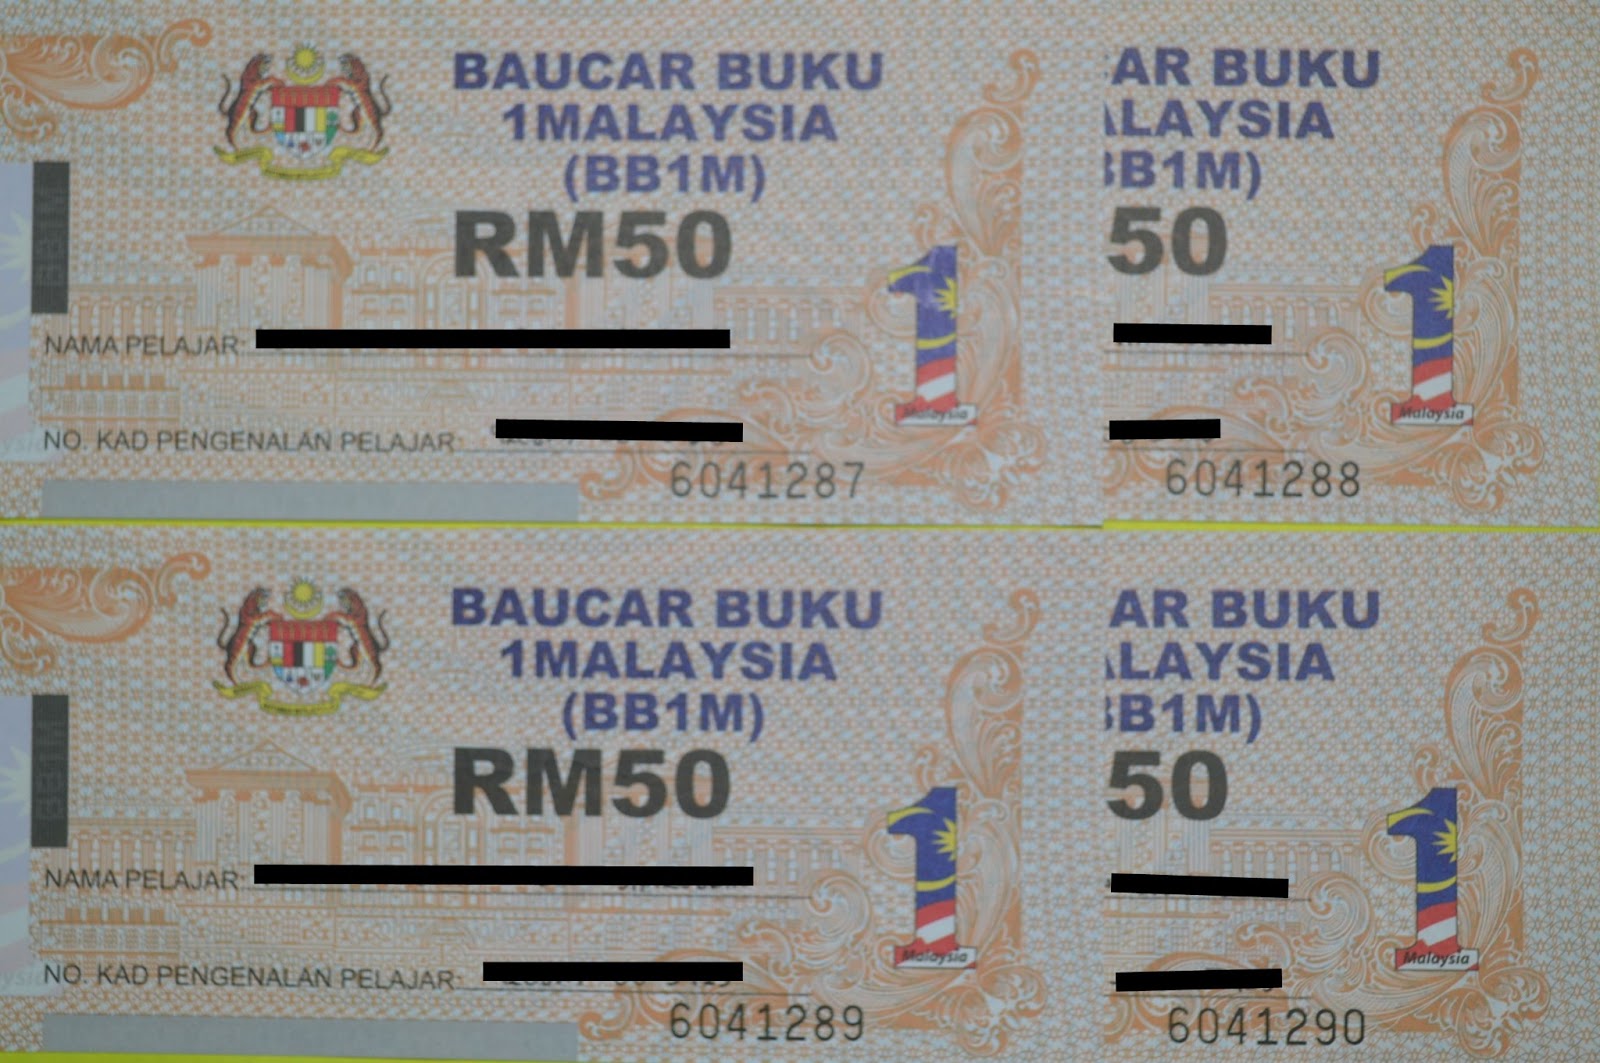 Galeri Sha Banknote: BAUCER BUKU 1 MALAYSIA BB1M